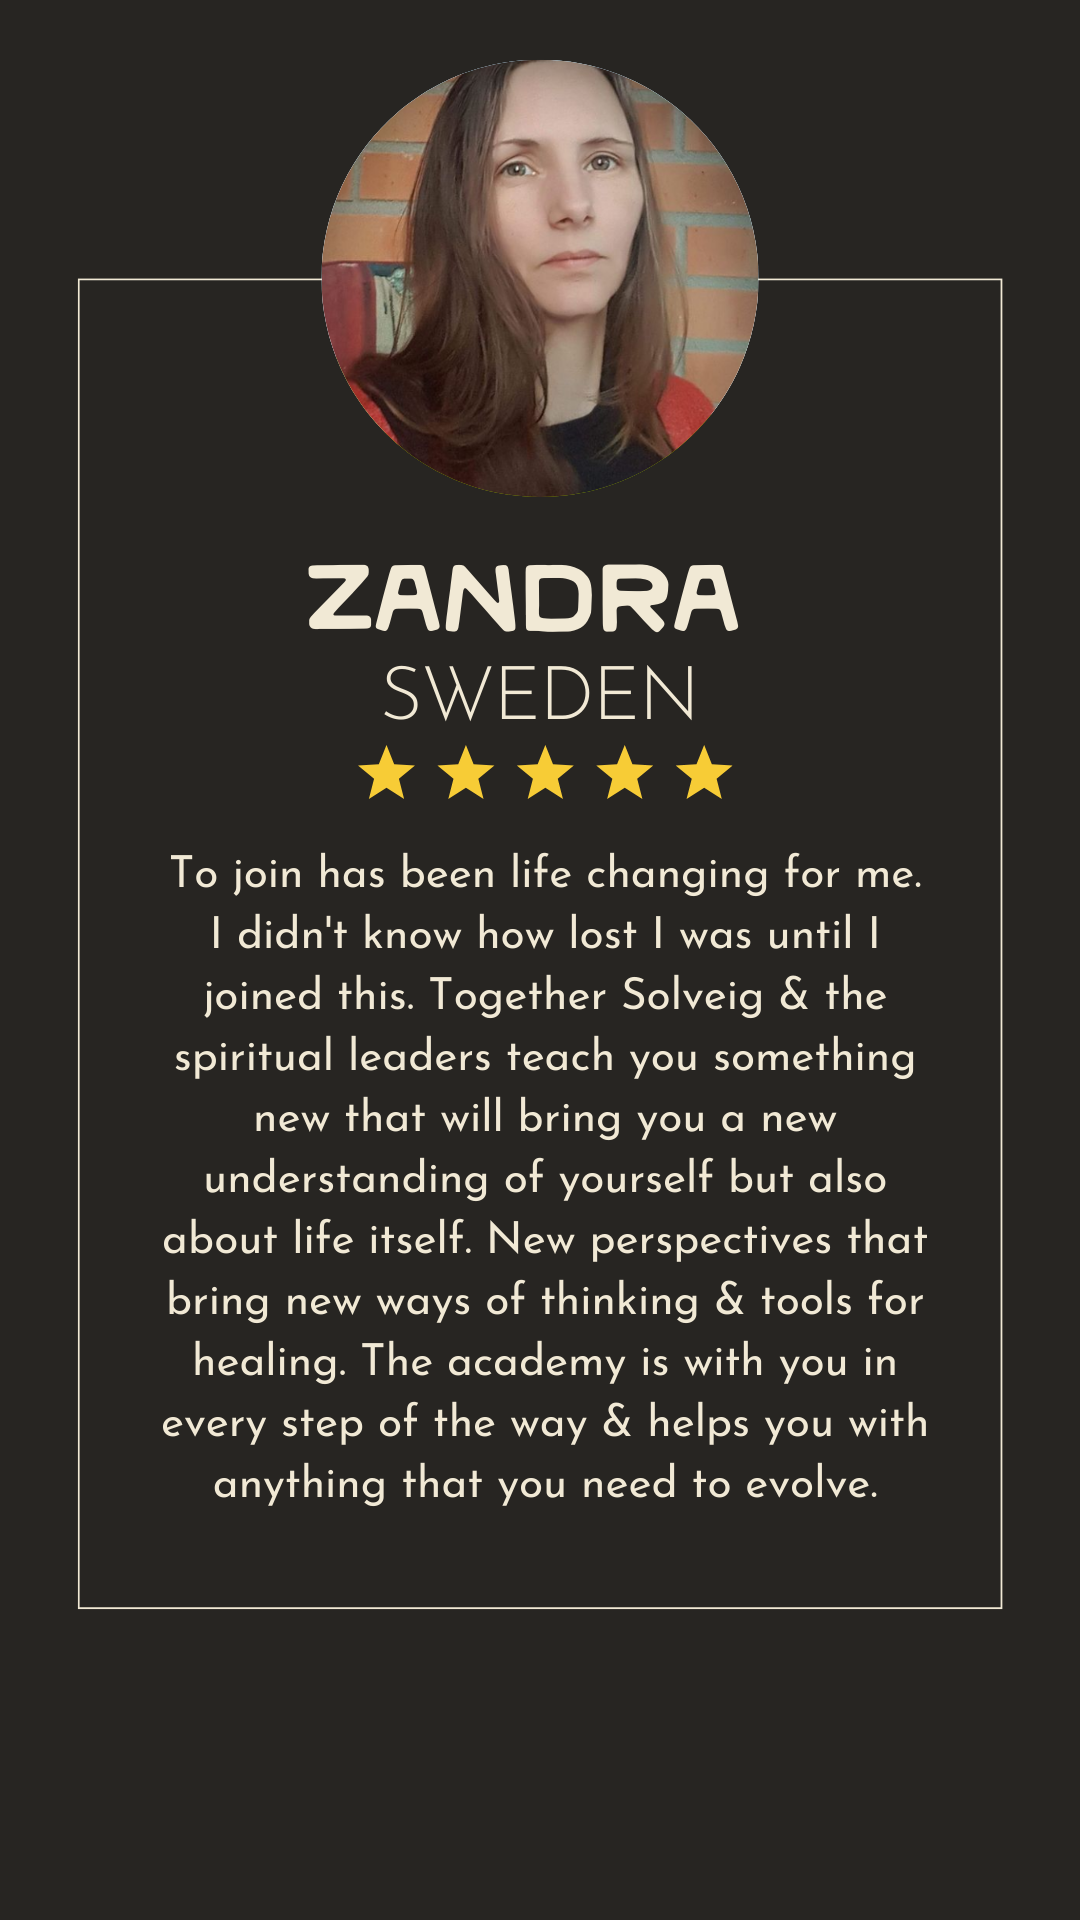 Zandra explaining how the mayan wisdom project changed her life.